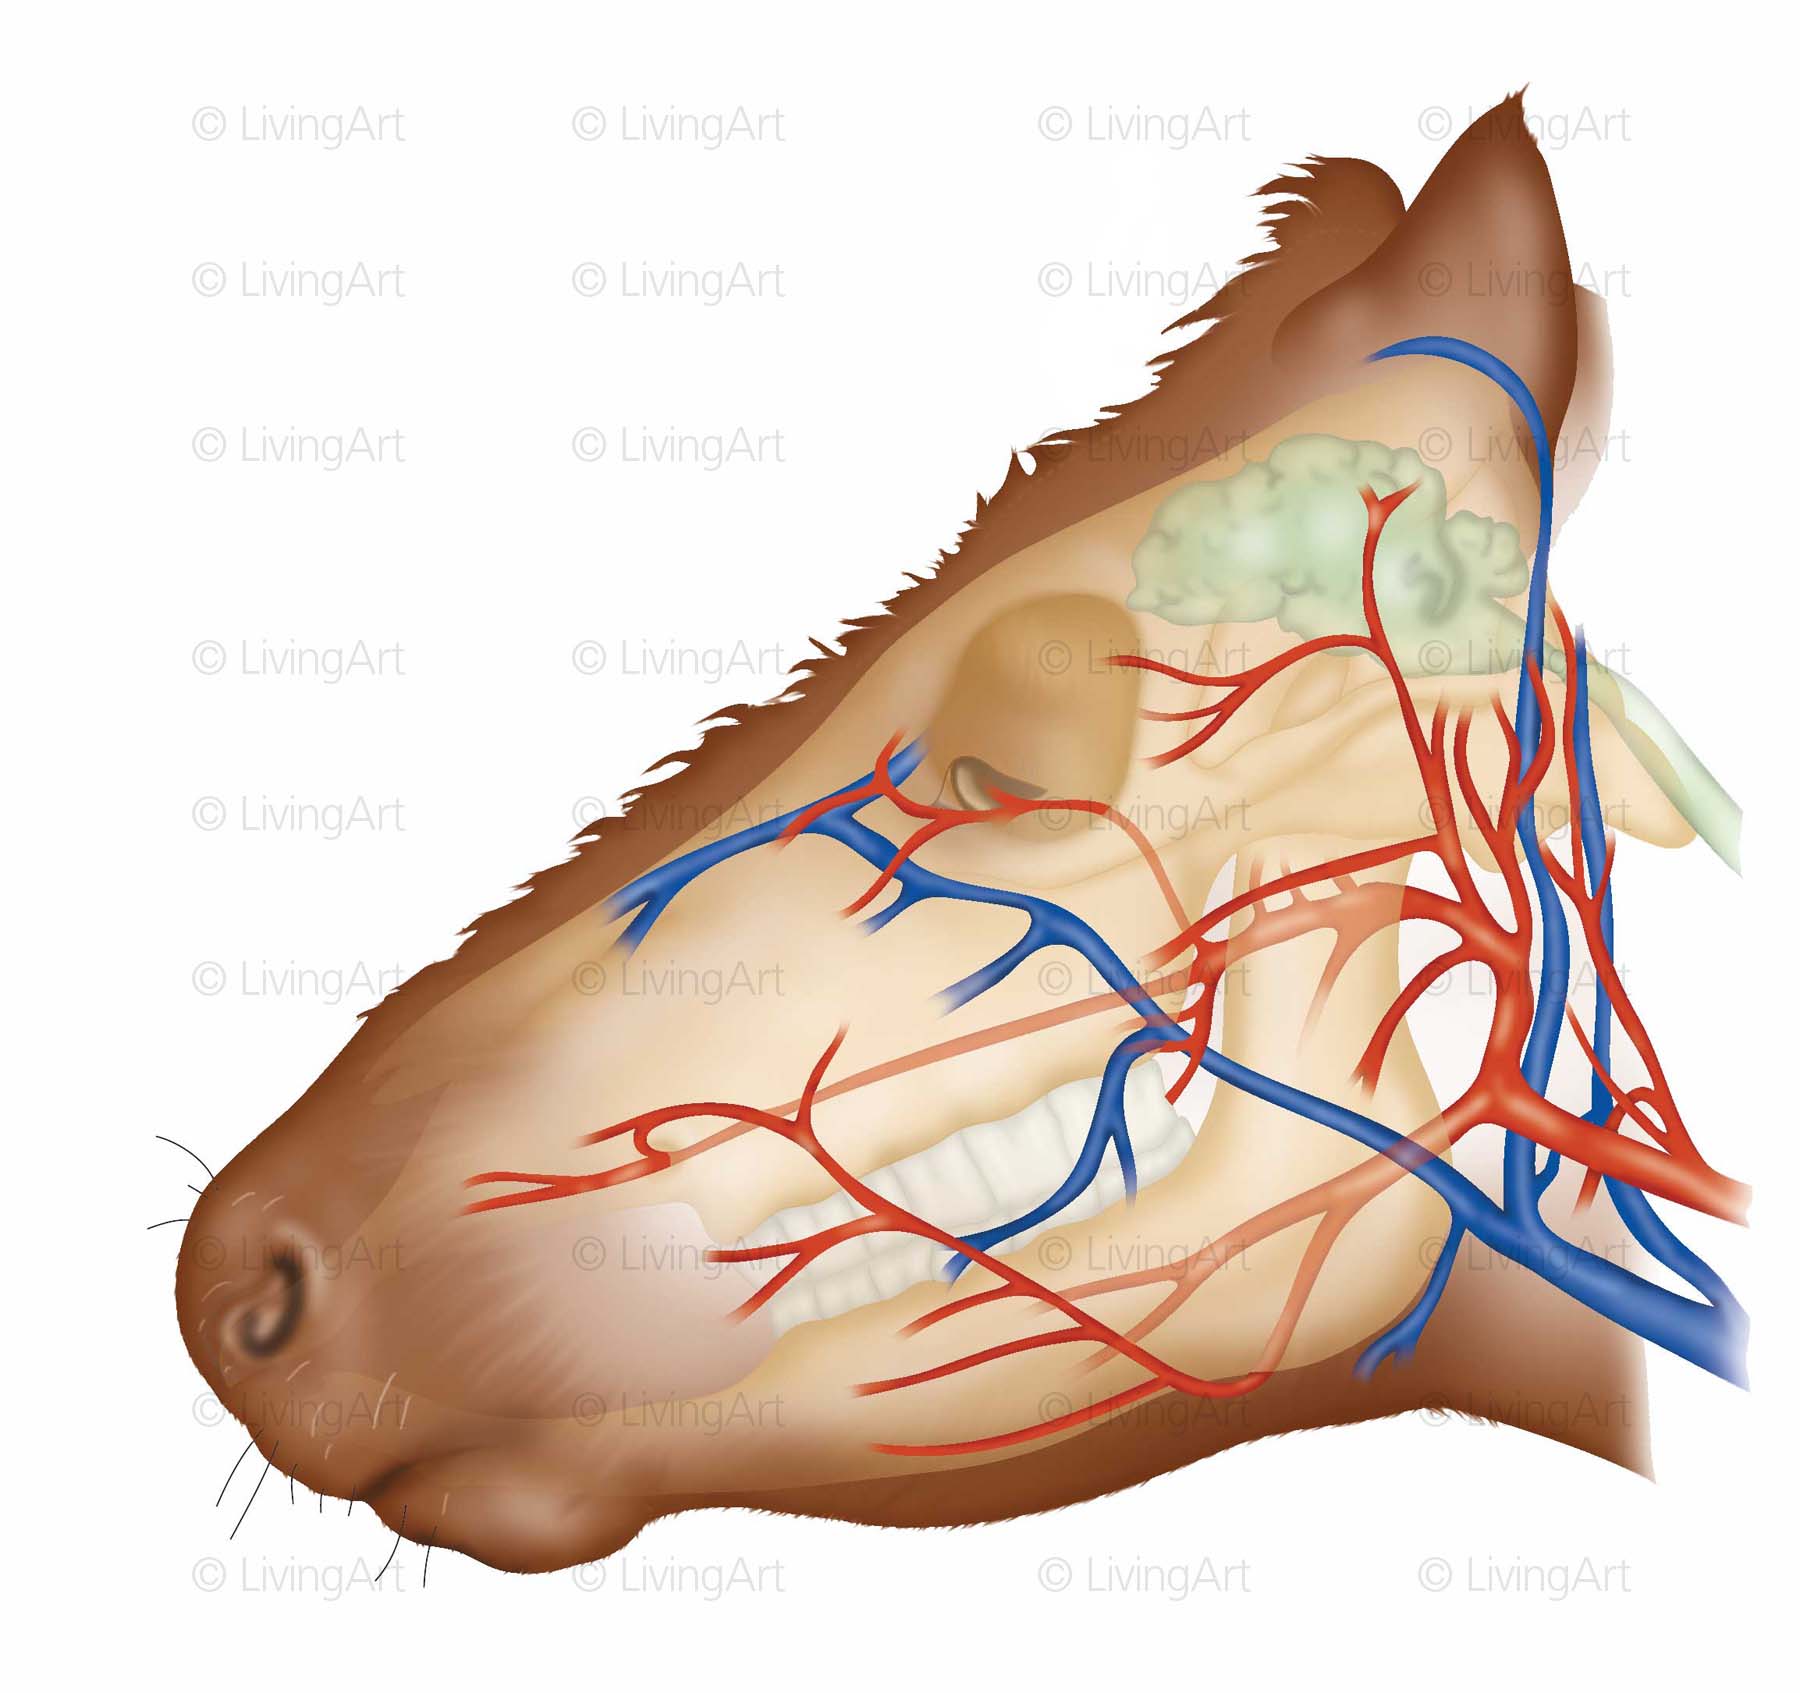 NEW-Cattle-head-anatomy